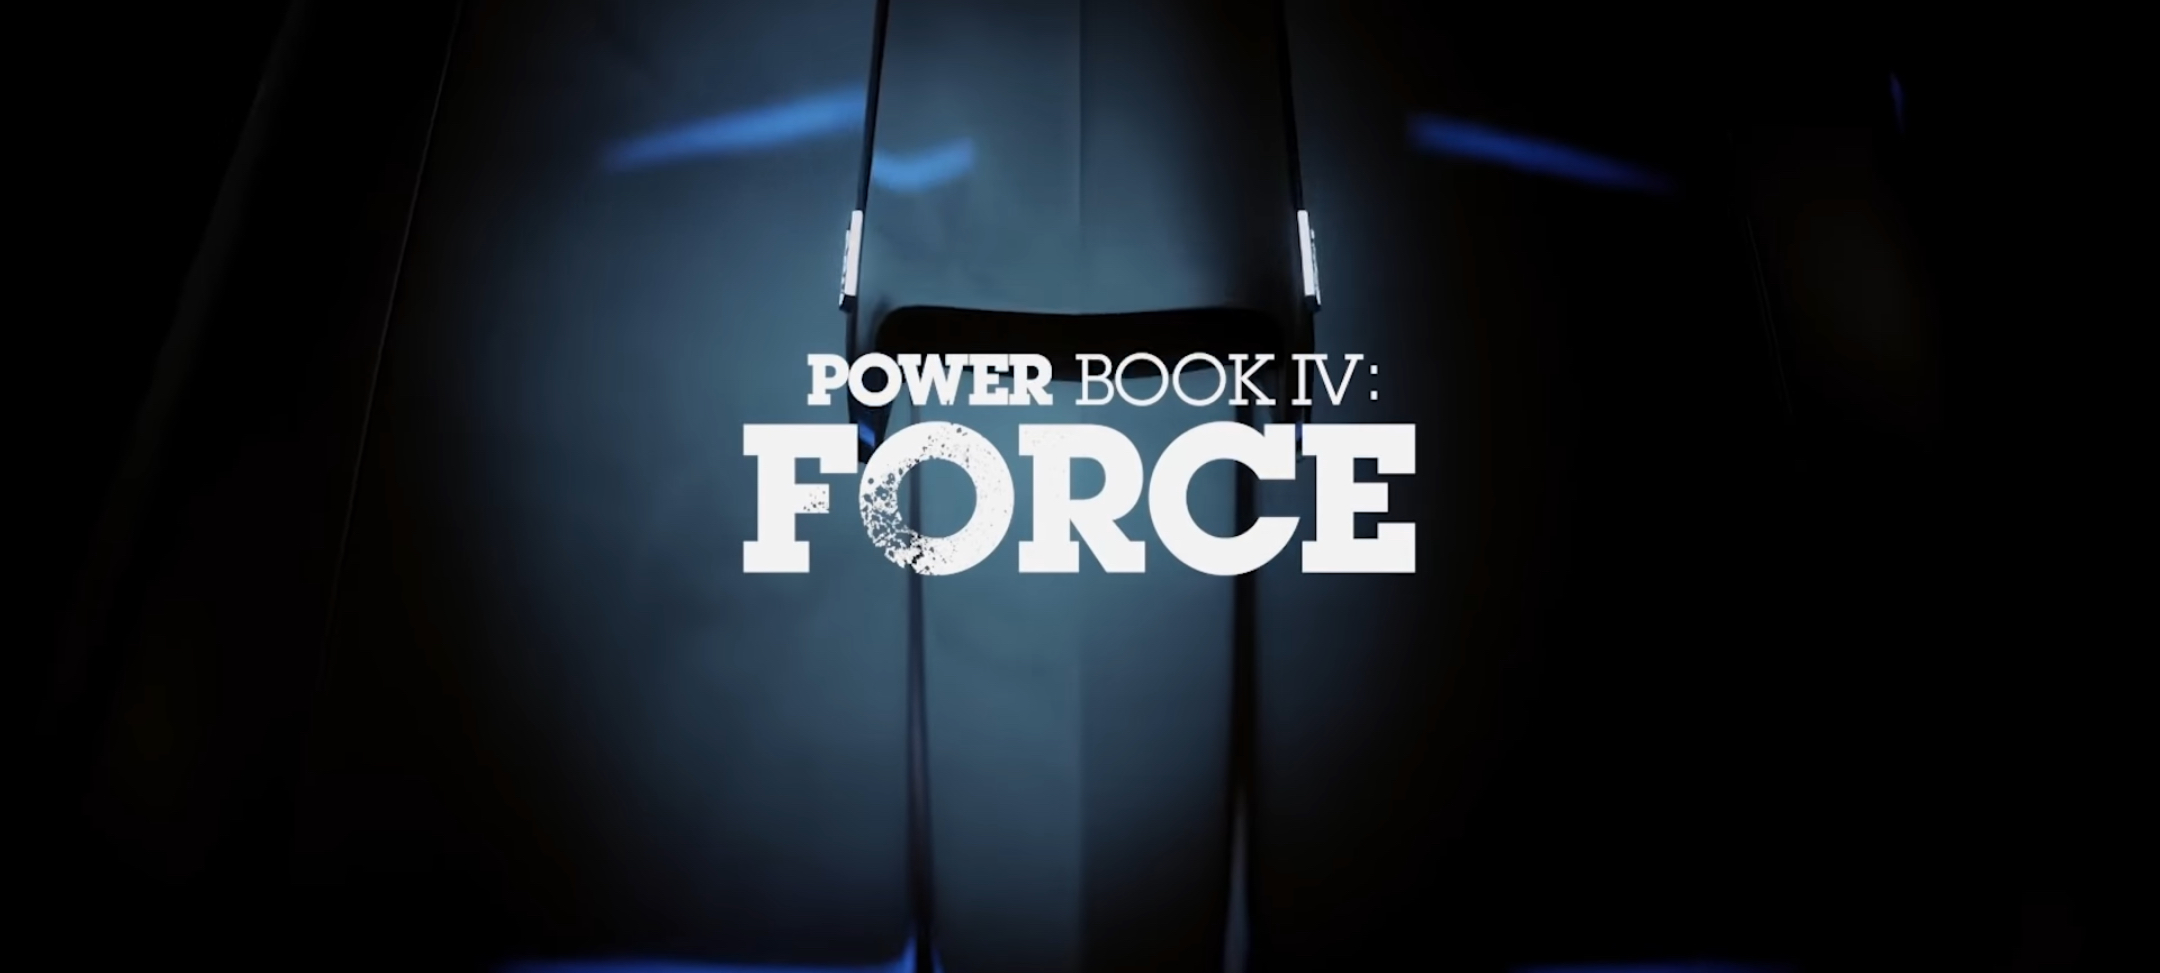 Power Book IV: Force season 2 release schedule – When's episode 9